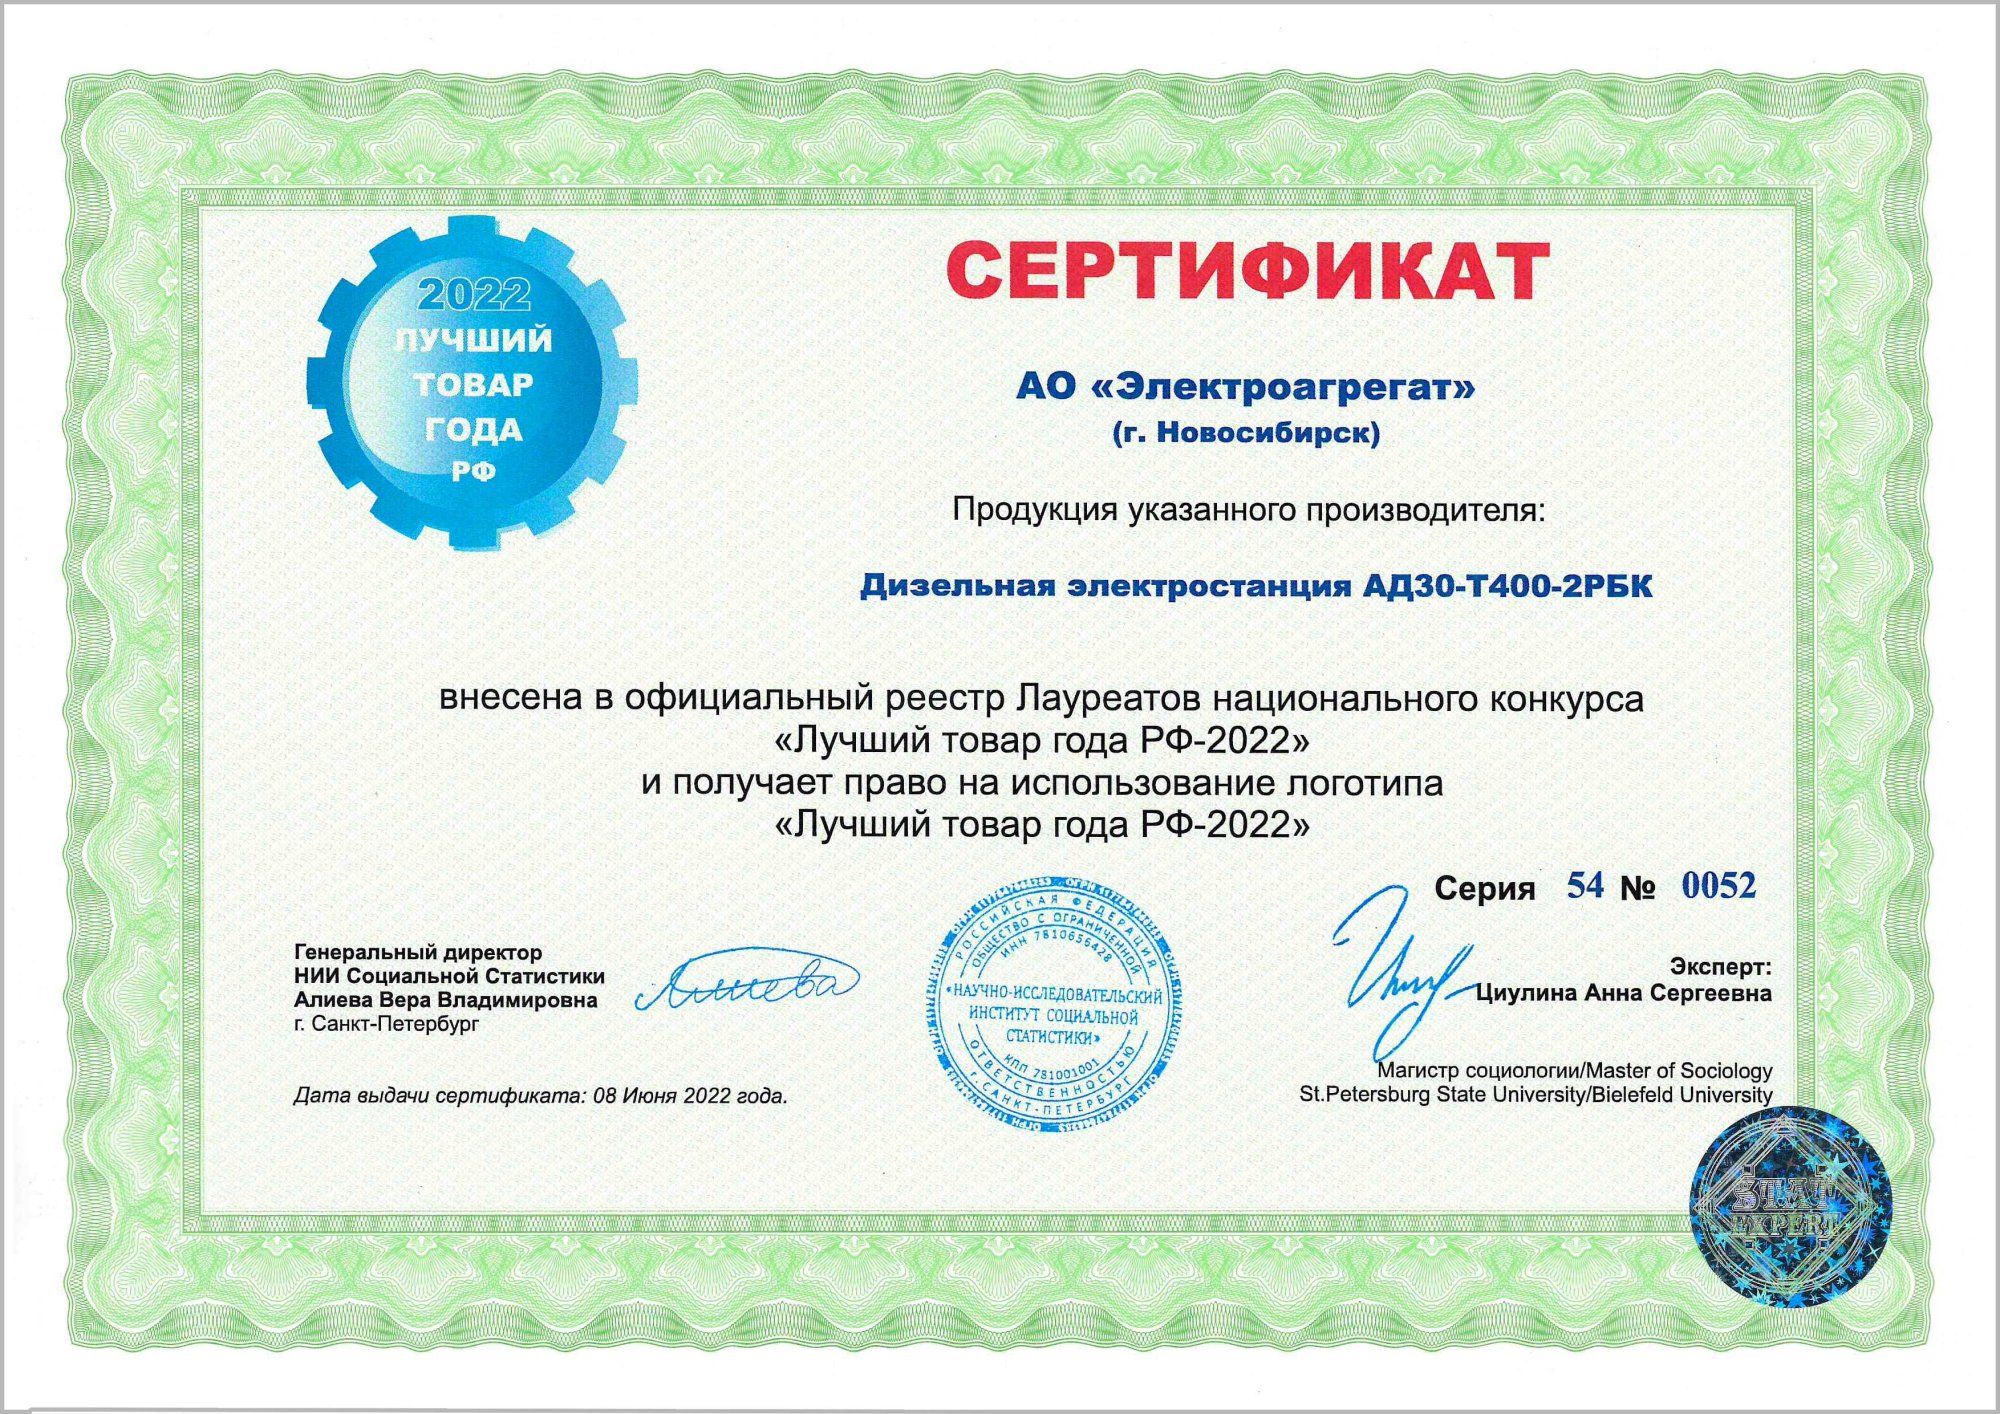 Сертификат АО Электроагрегат на ДГУ АД30-Т400-2РБК. Лучший товар года 2022